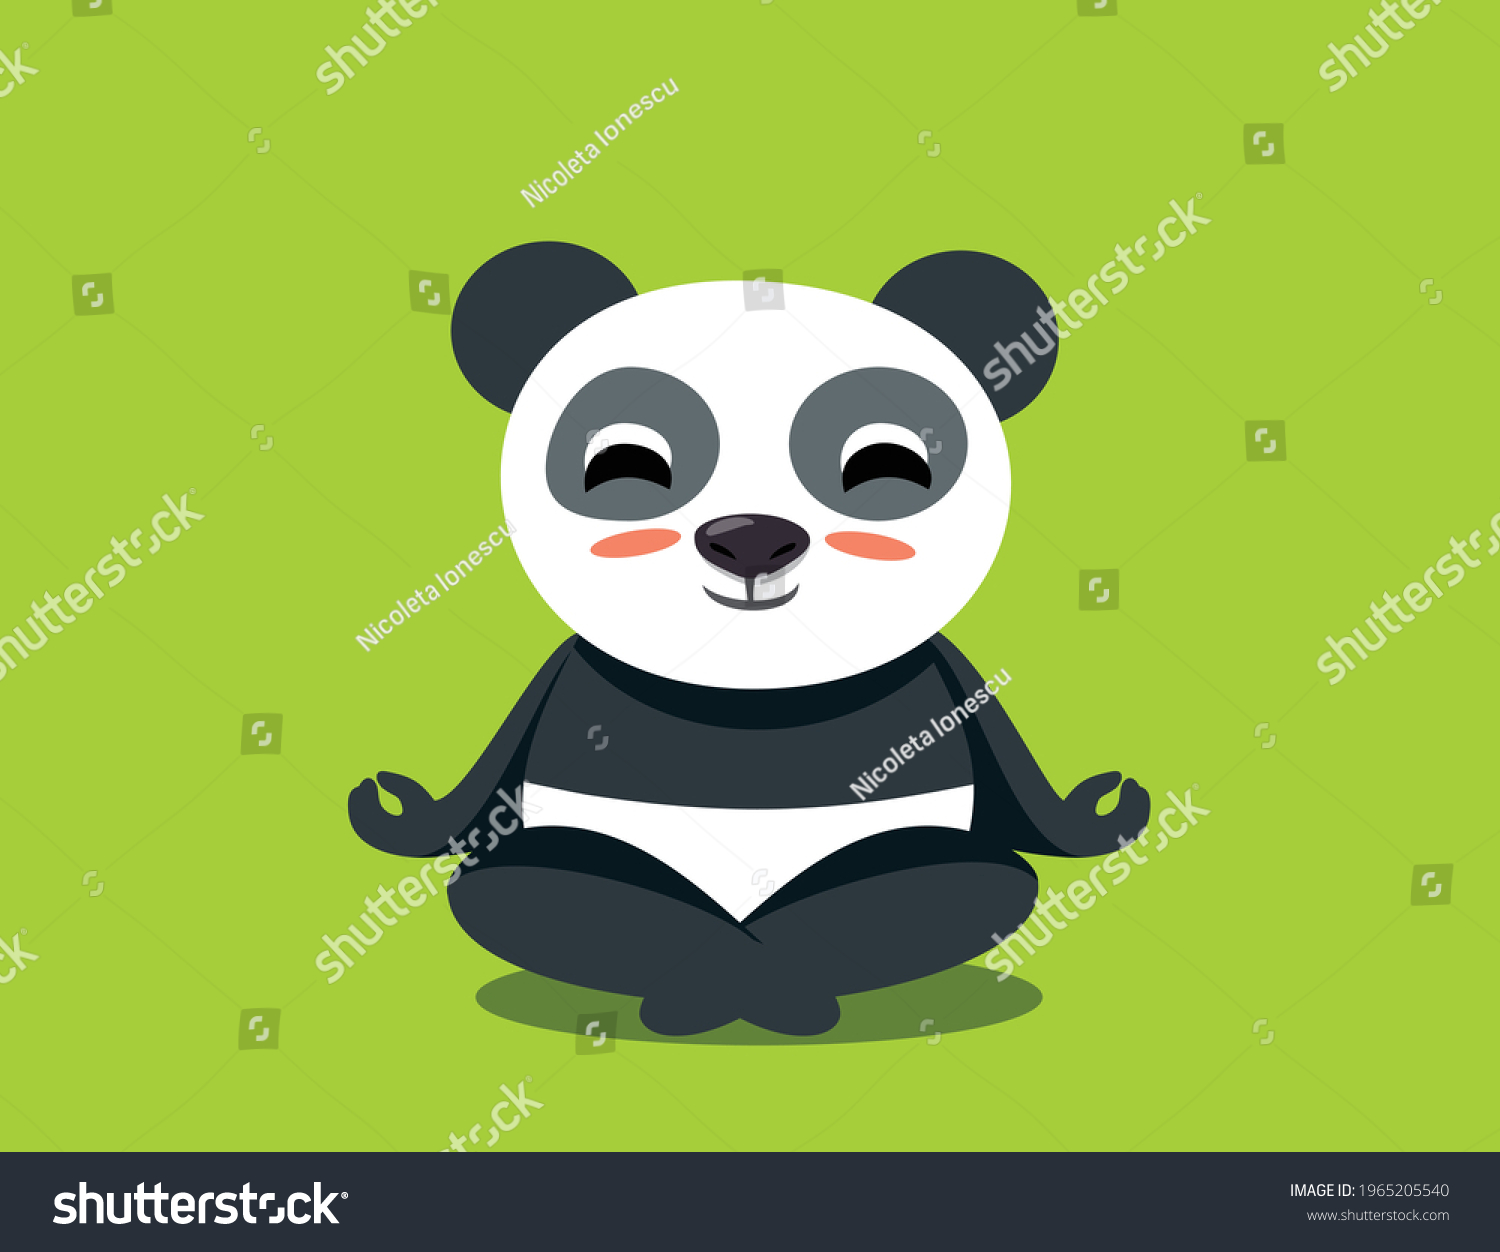 SVG of Funny Cartoon Yoga Panda Meditating in Lotus Pose. Cute bear character relaxing and exercising vector mascot illustration svg